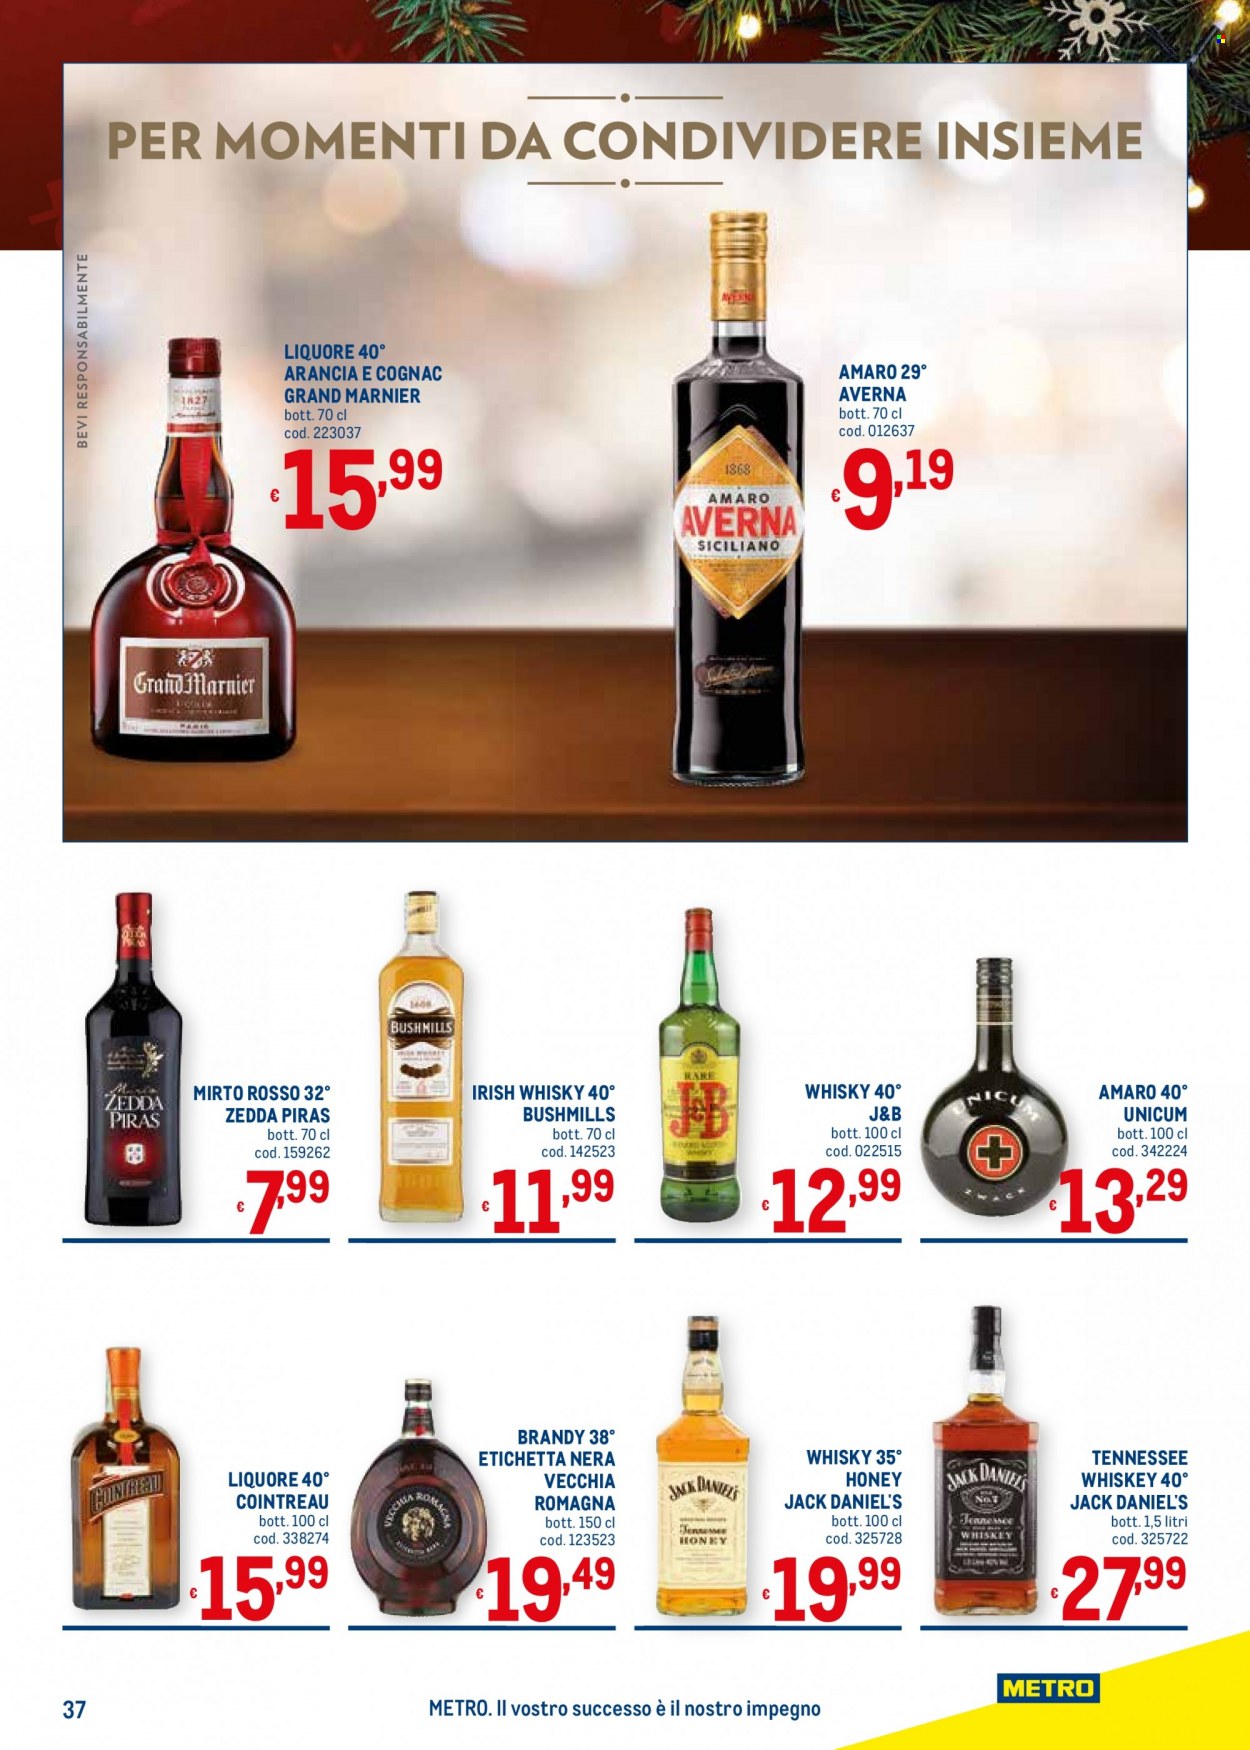 thumbnail - Volantino Metro - 24/11/2022 - 31/12/2022 - Prodotti in offerta - brandy, cognac, Cointreau, Mirto, whiskey, whisky, Tennessee Whiskey, liquore, irish whiskey, Jack Daniel's, Grand Marnier, Vecchia Romagna, Amaro Unicum, Amaro Averna, aperitivo. Pagina 37.